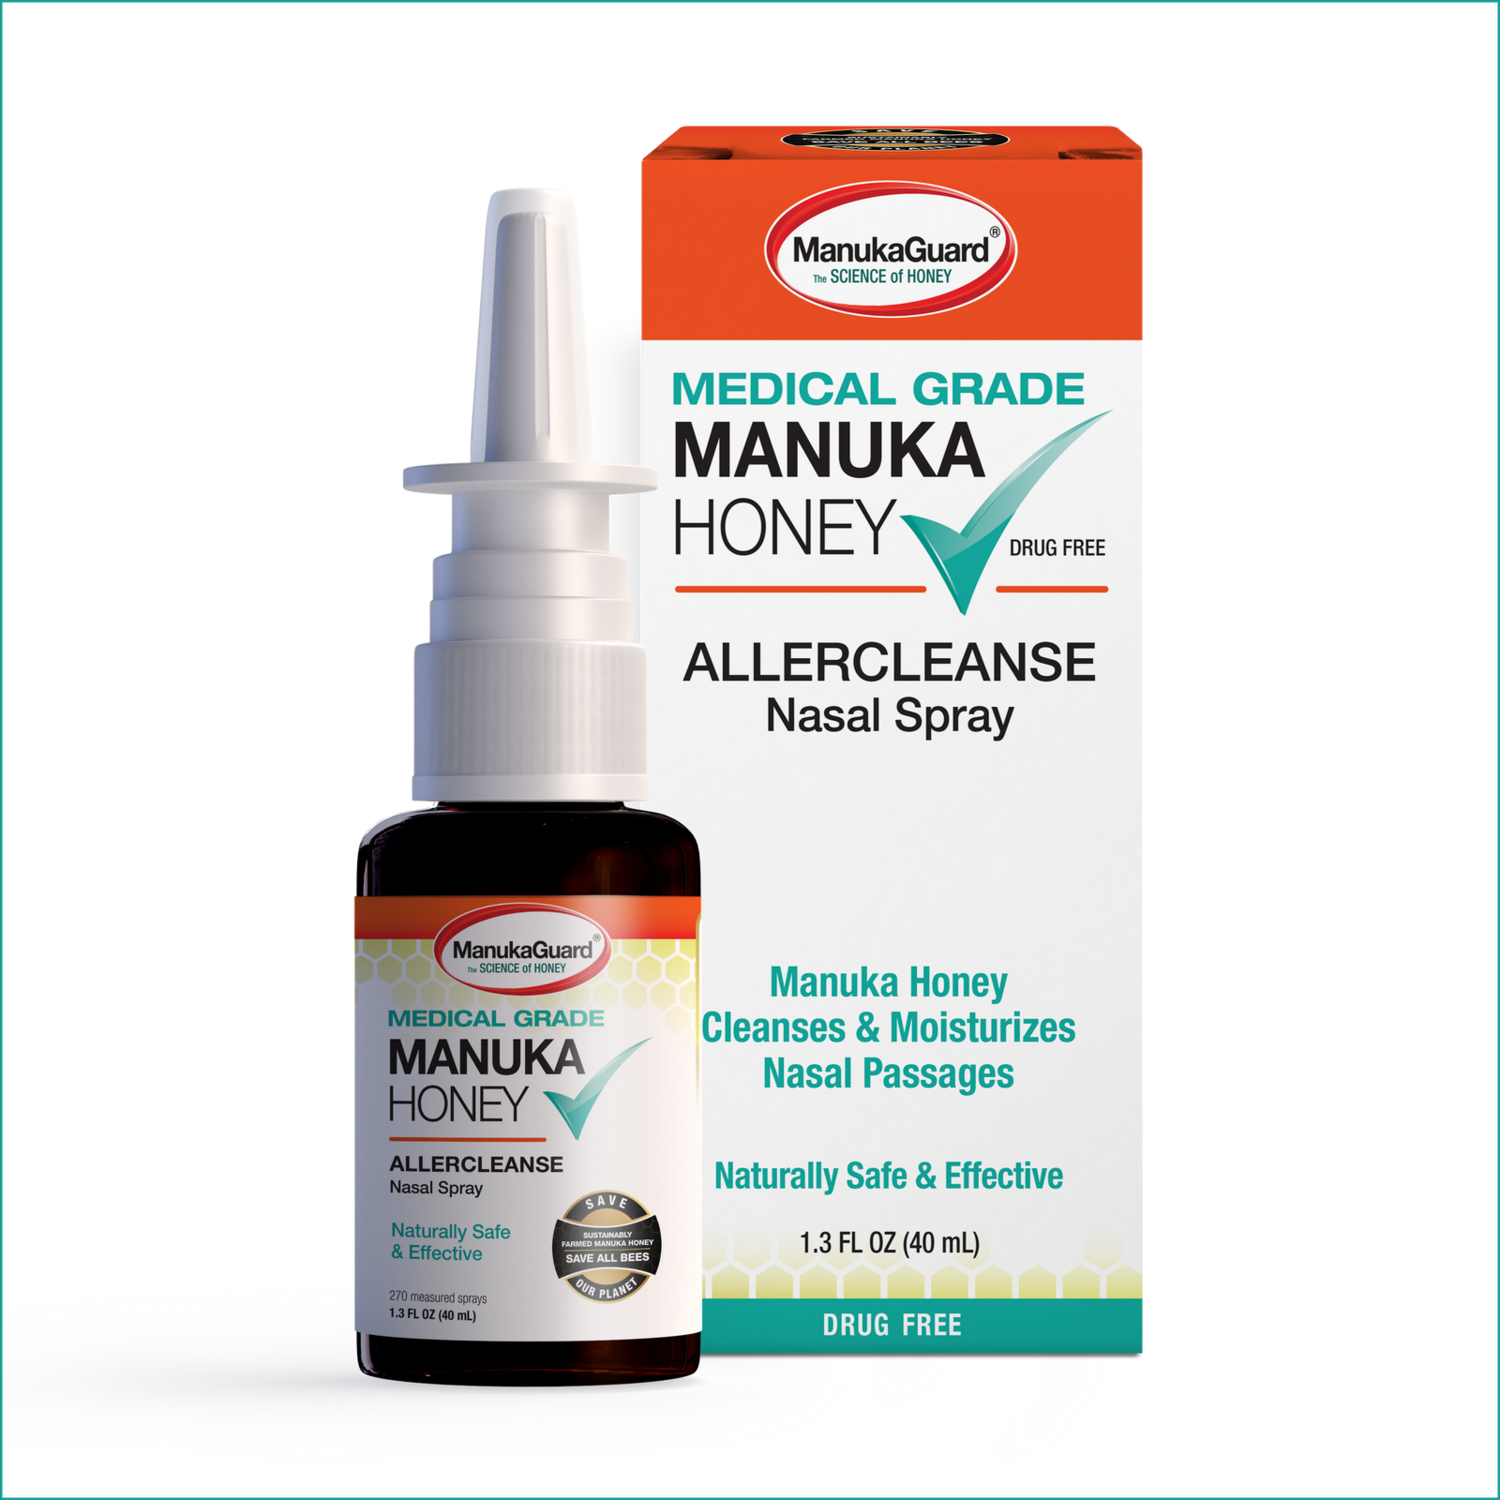 Manukaguard Allercleanse Nasal Spray